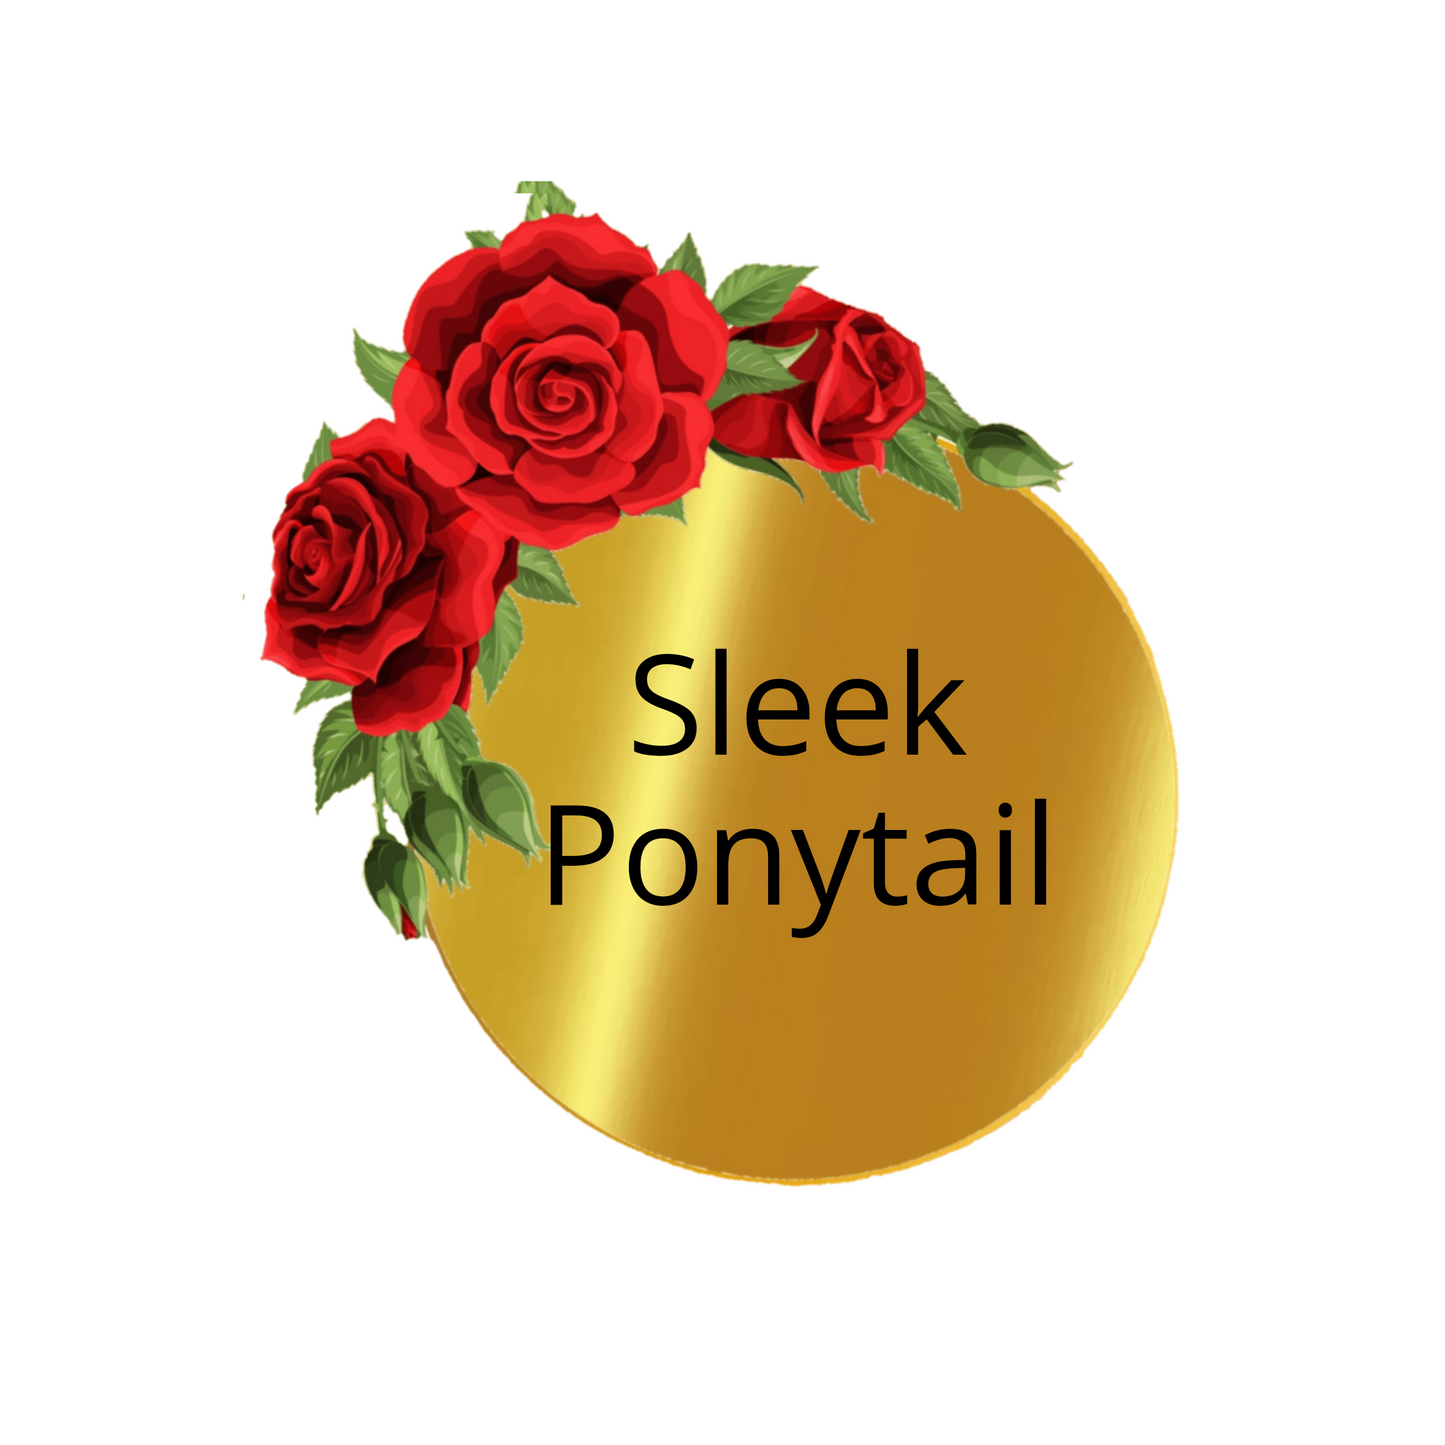 Sleek Ponytail (Relaxed Hair)